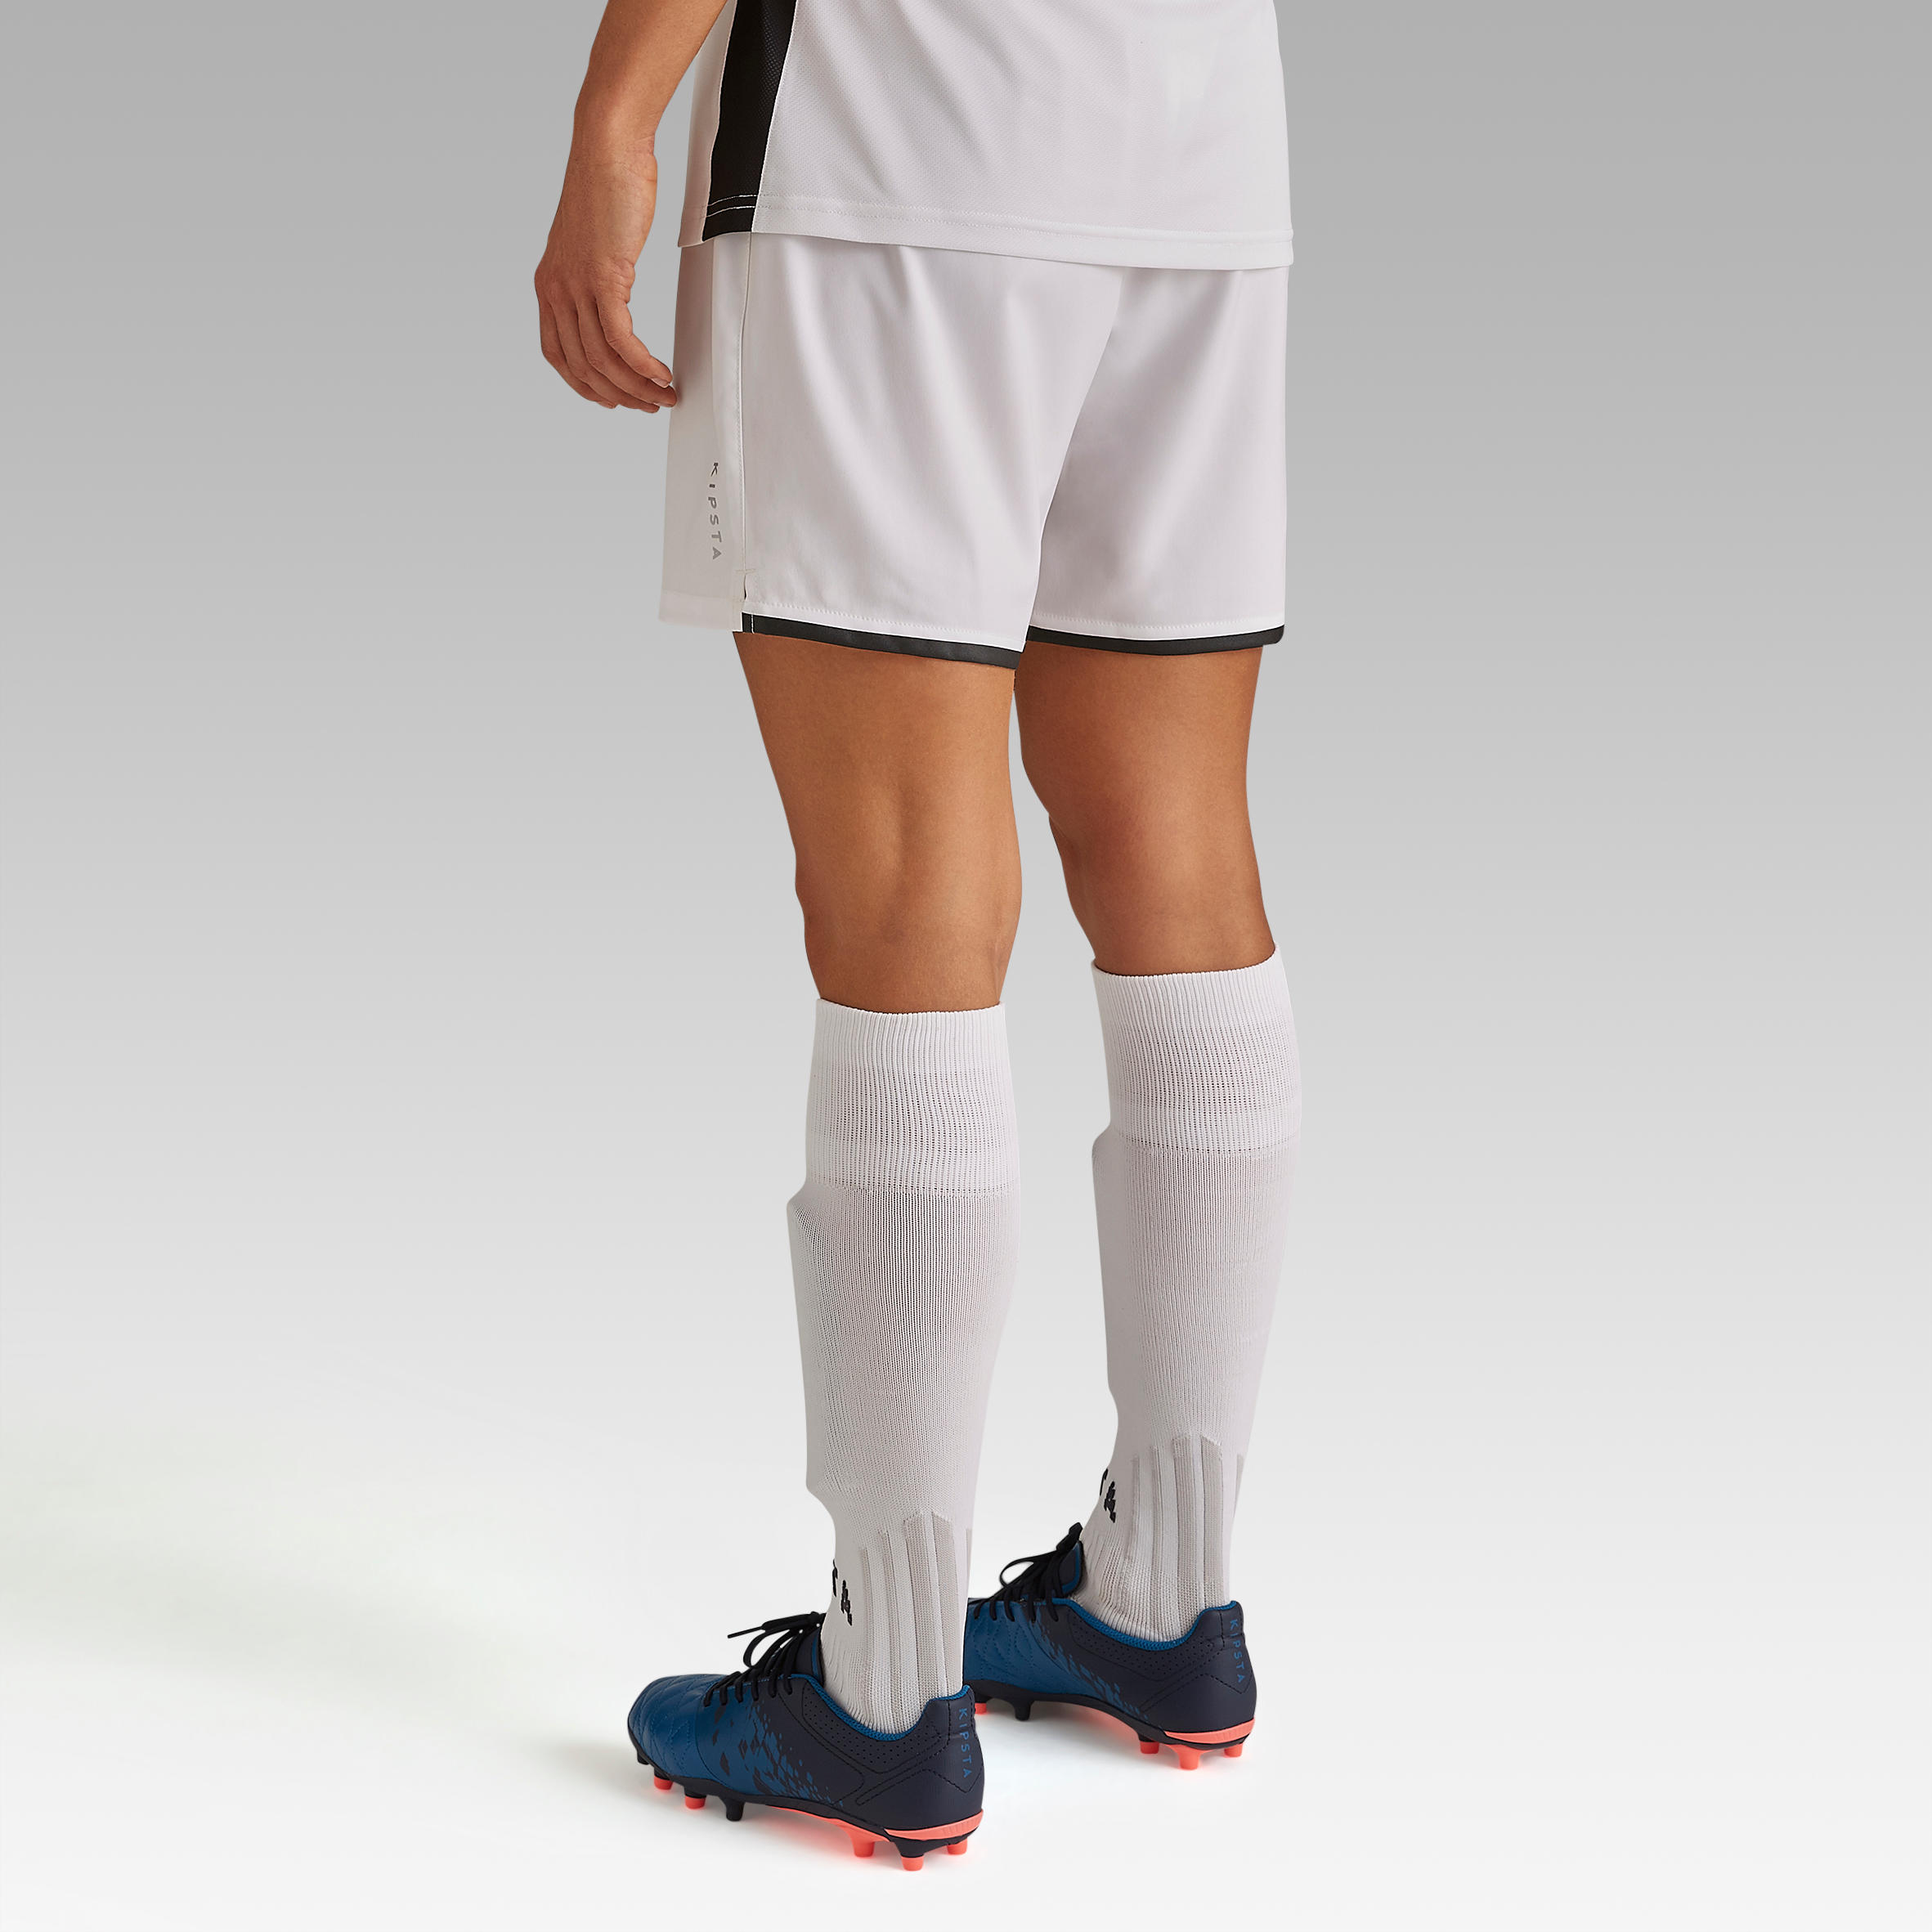 F500 Women's Football Shorts - White 5/9